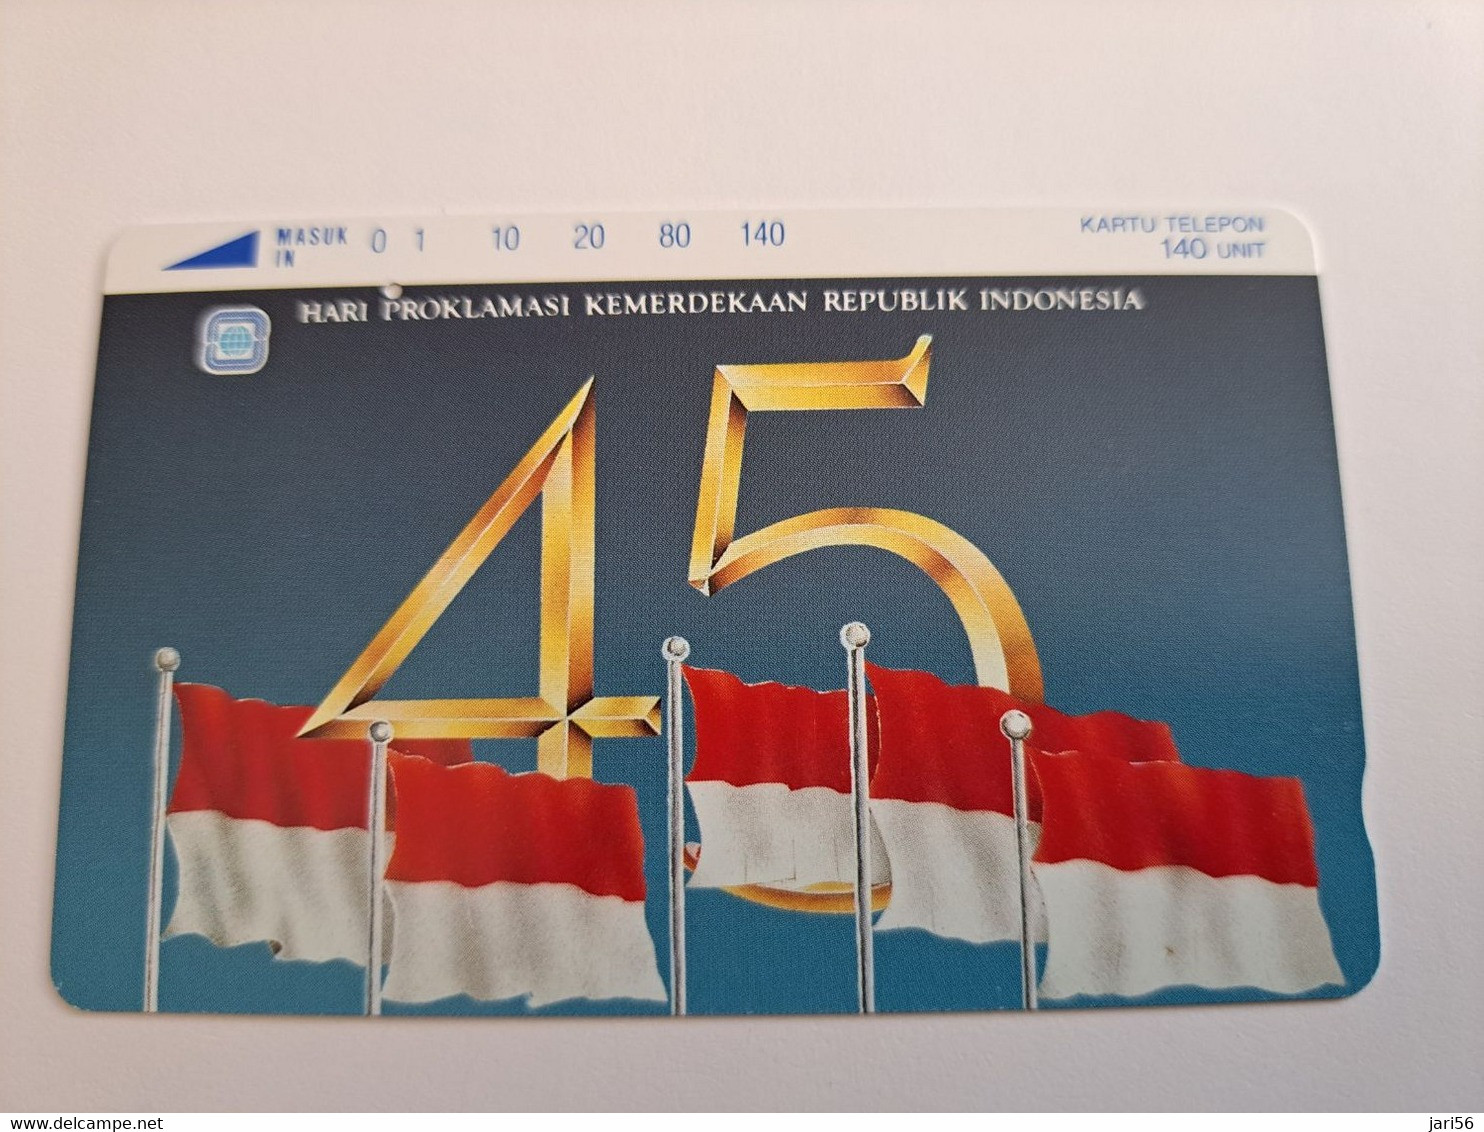 INDONESIA MAGNETIC/TAMURA  140  UNITS /   HARI PROLAMASI KEMERDEKAAN REP INDONESIA     MAGNETIC   CARD    **9796** - Indonesien